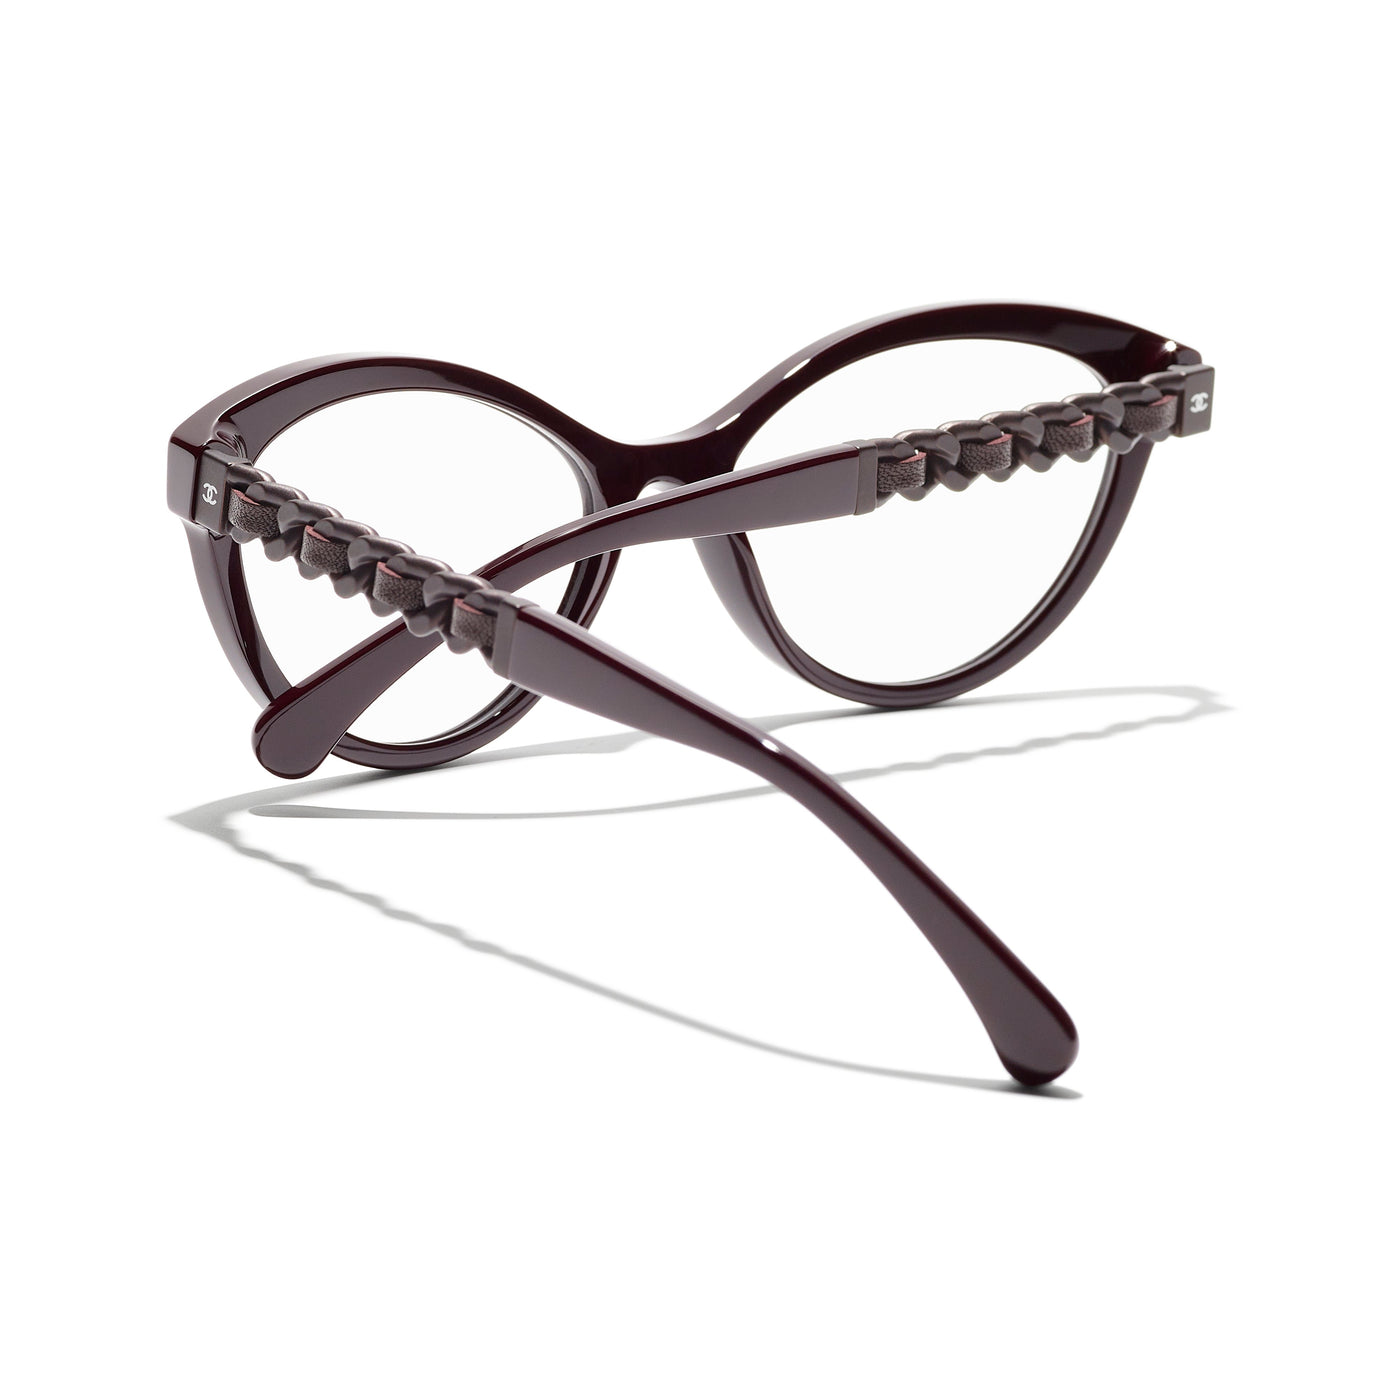 Chanel Cat Eye Blue Light Glasses - Acetate and Calfskin, Black - Polarized - UV Protected - Women's Sunglasses - 3428QS C622/SB